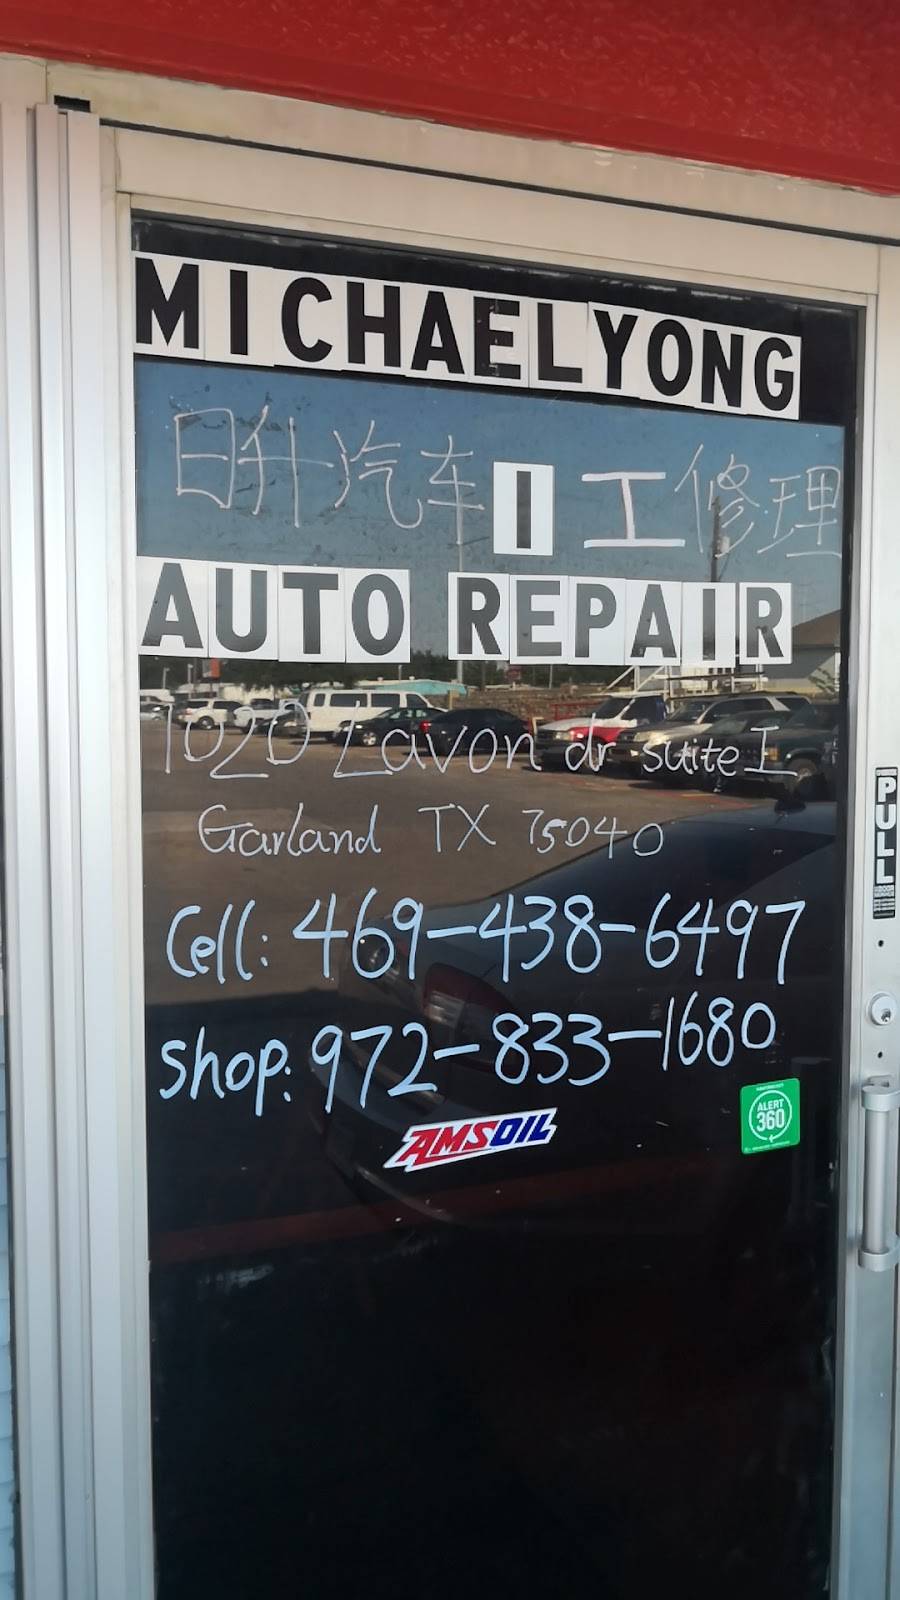 Michael Yong Auto Repair | 1020 Lavon Dr suit I, Garland, TX 75040 | Phone: (972) 833-1680